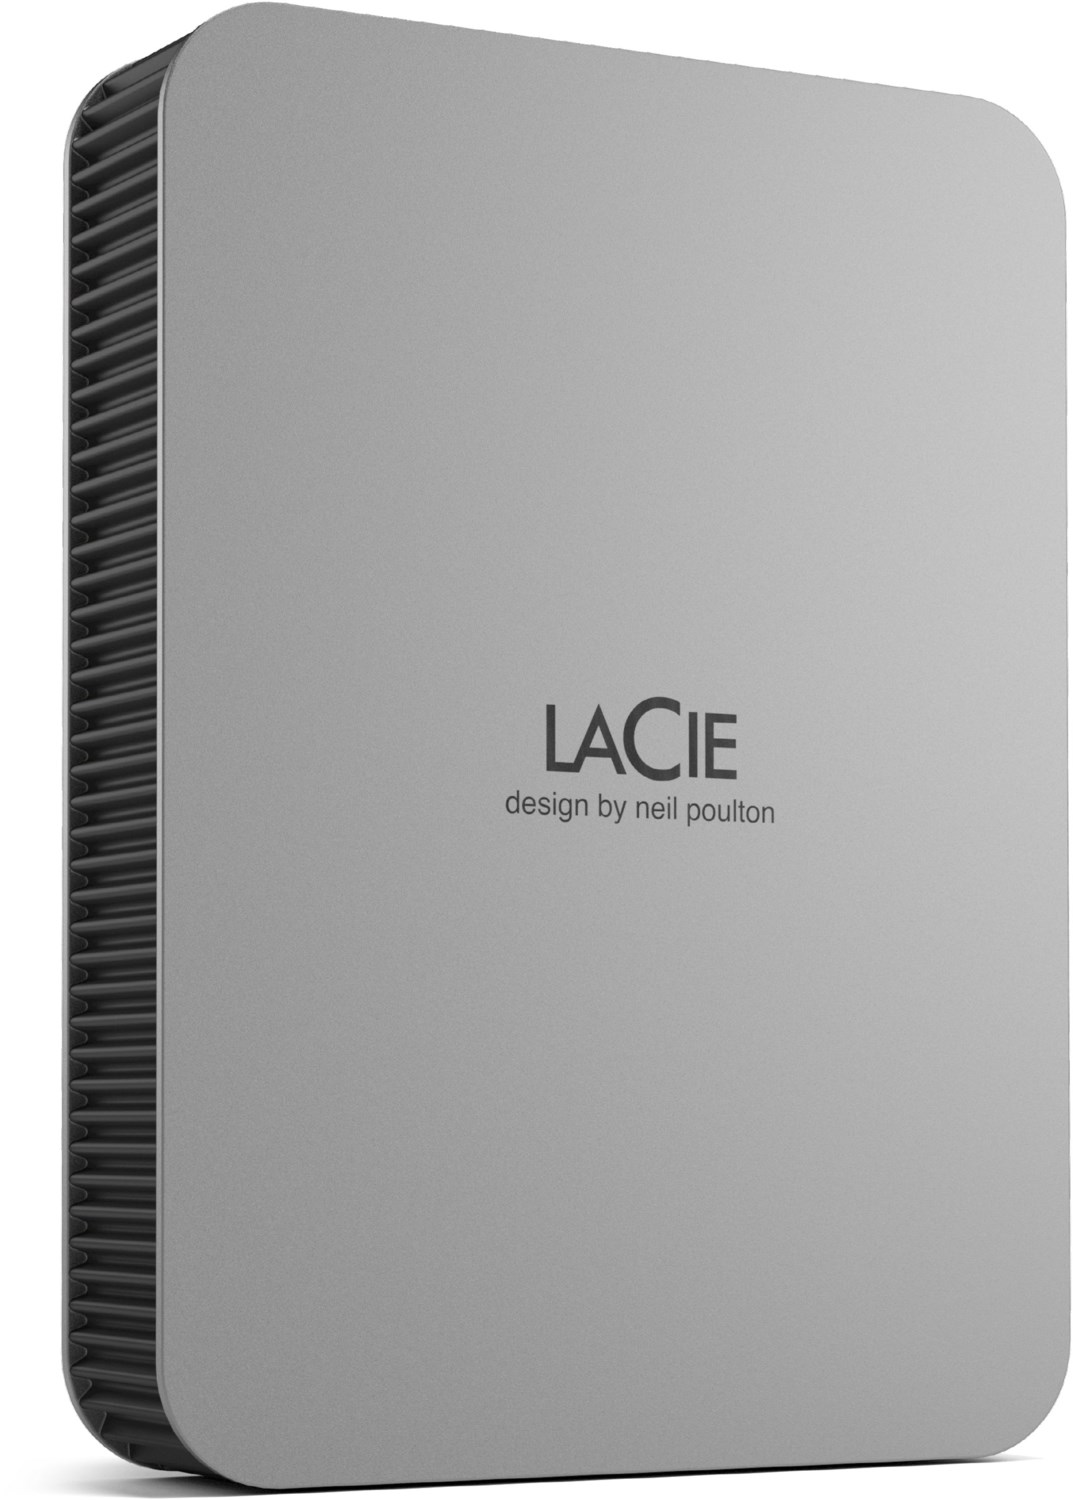 Mobile Drive (4TB) Externe Festplatte mond-silber von Lacie